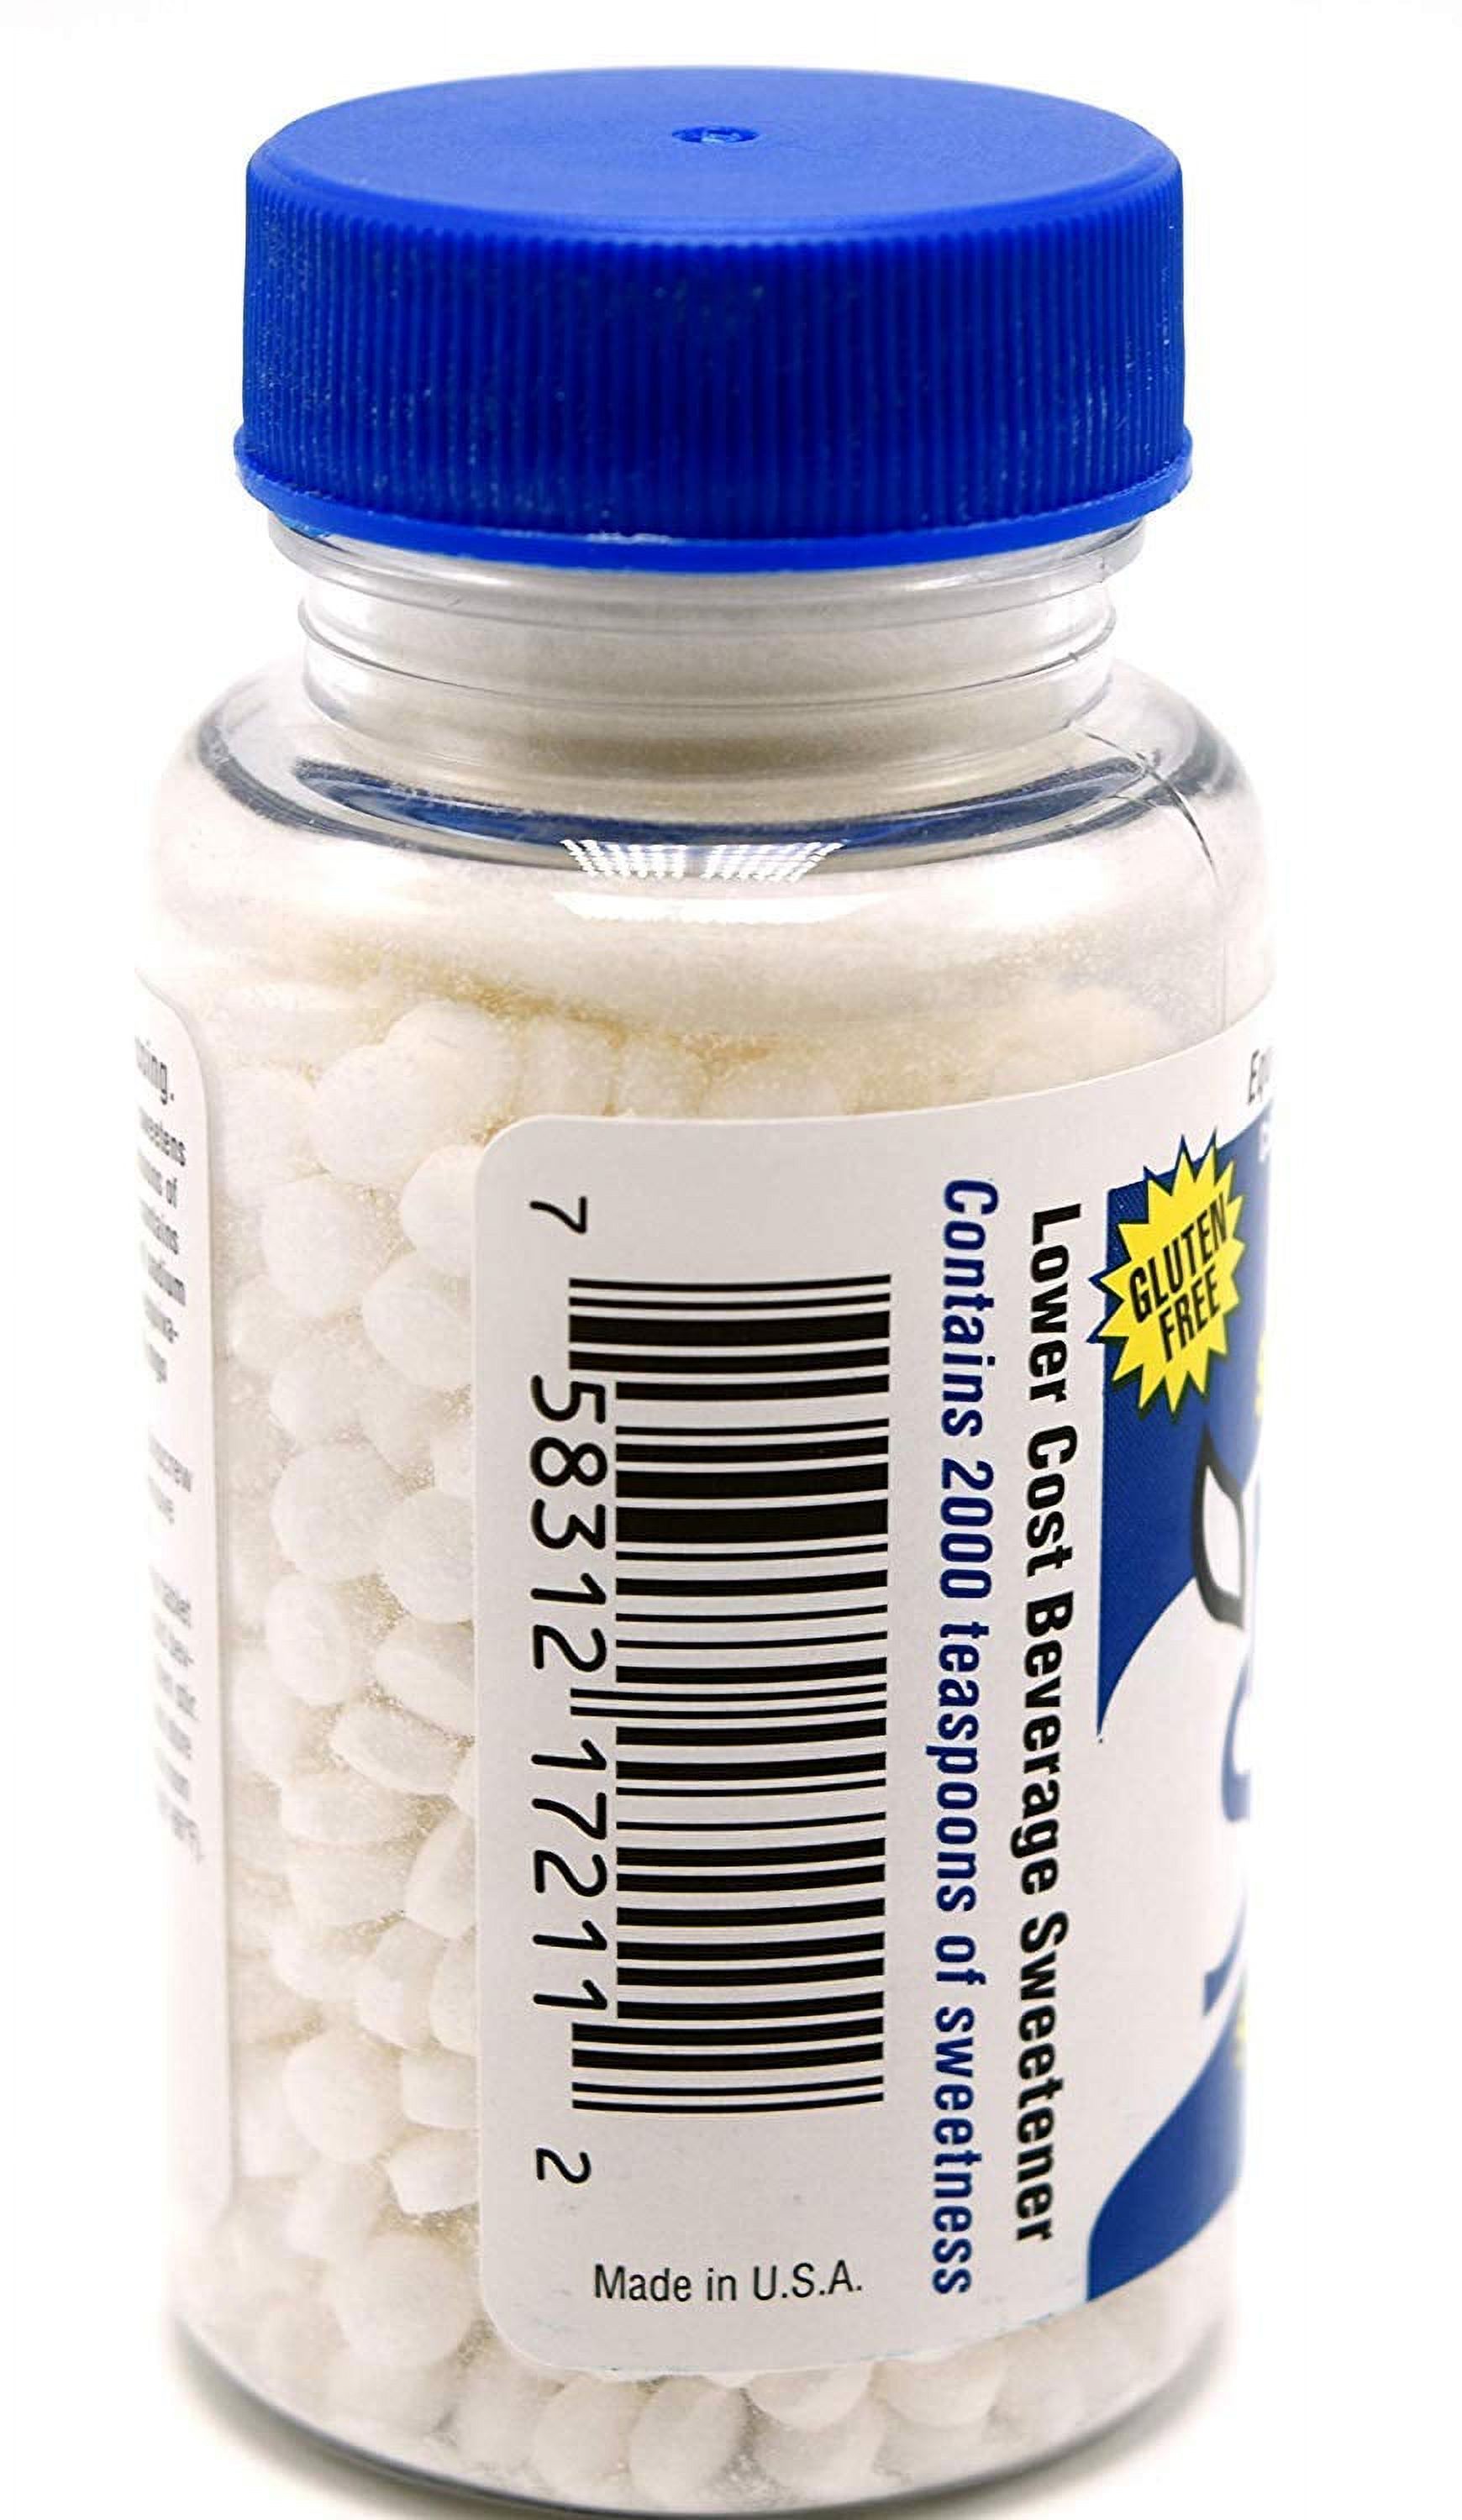 1/2 grain 1000 saccharin tablets - image 2 of 4